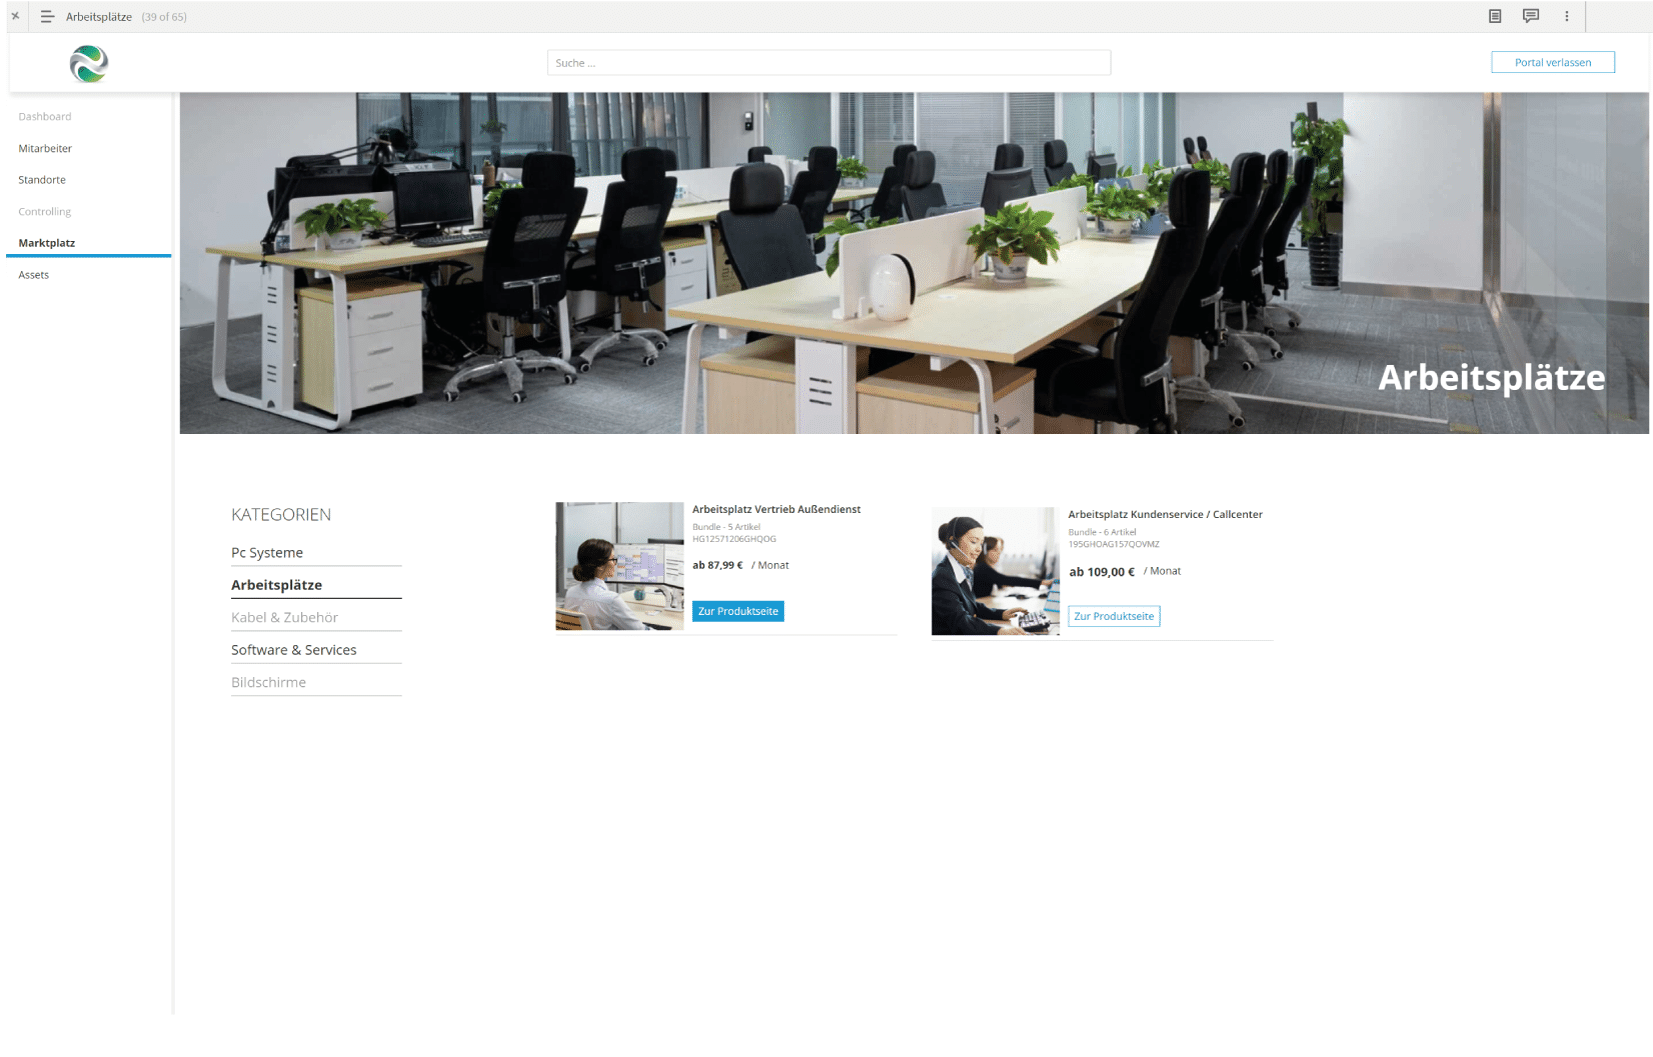 MSP Portal